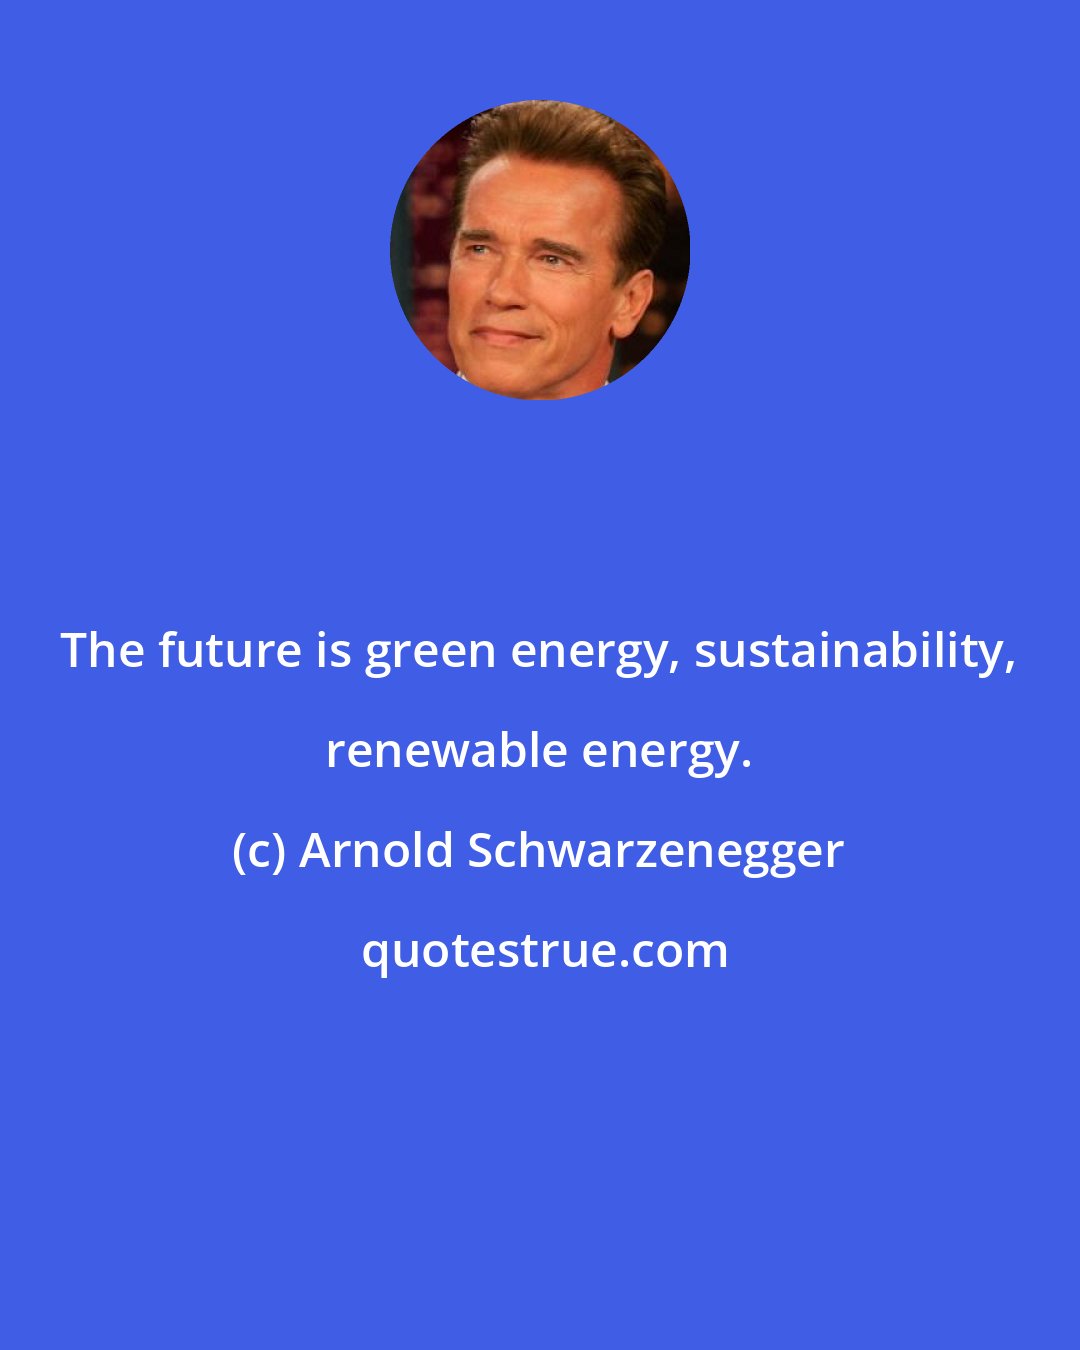 Arnold Schwarzenegger: The future is green energy, sustainability, renewable energy.